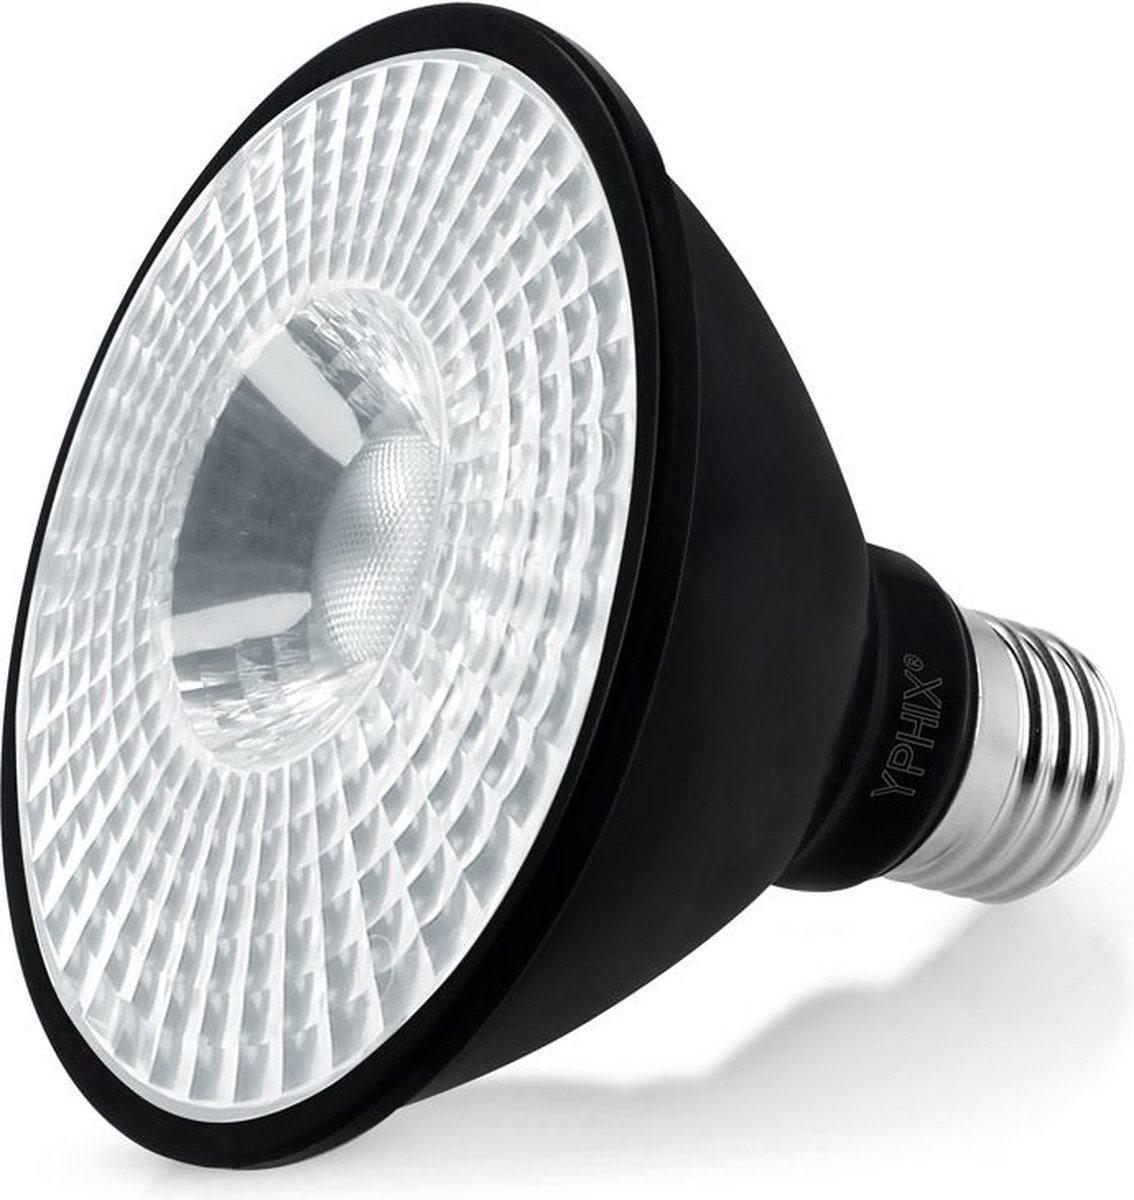 thermometer Anemoon vis duisternis E27 LED lamp Pollux Par 30 11W 3000K dimbaar zwart | bol.com